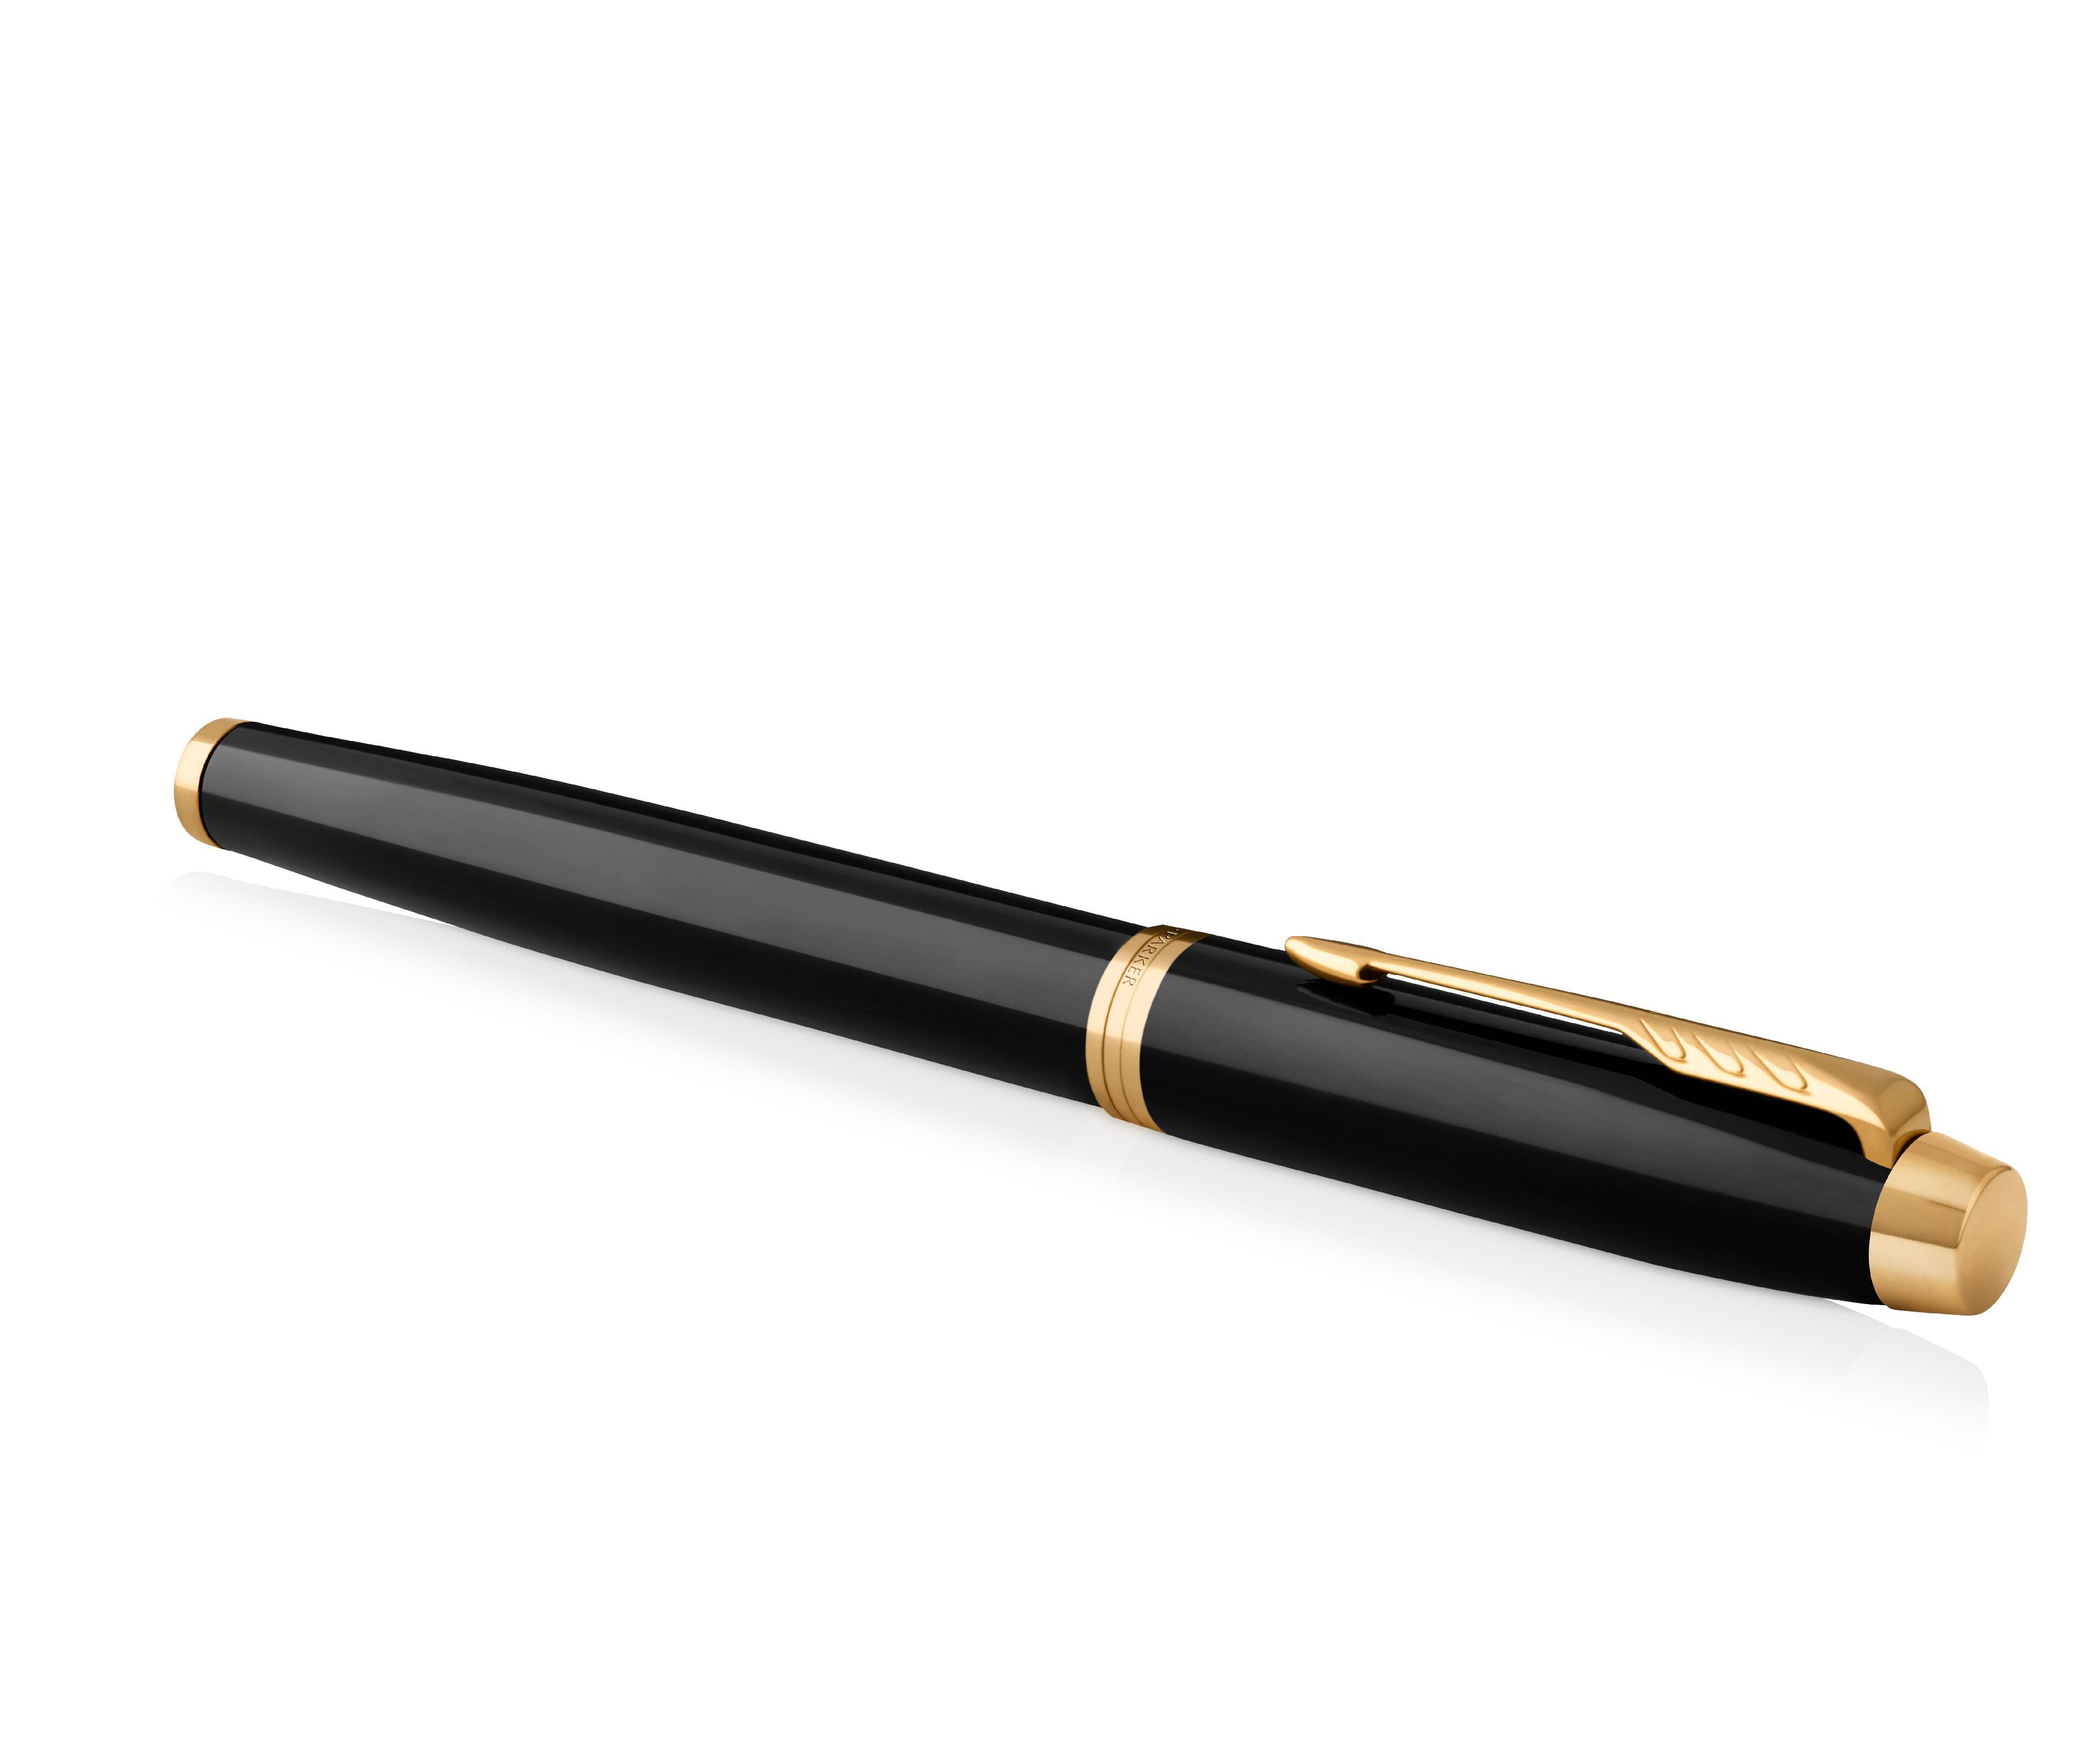 Details about   Duke D2 Black Gold Trim Gentleman Rollerball Pen with Black Pen Refill 